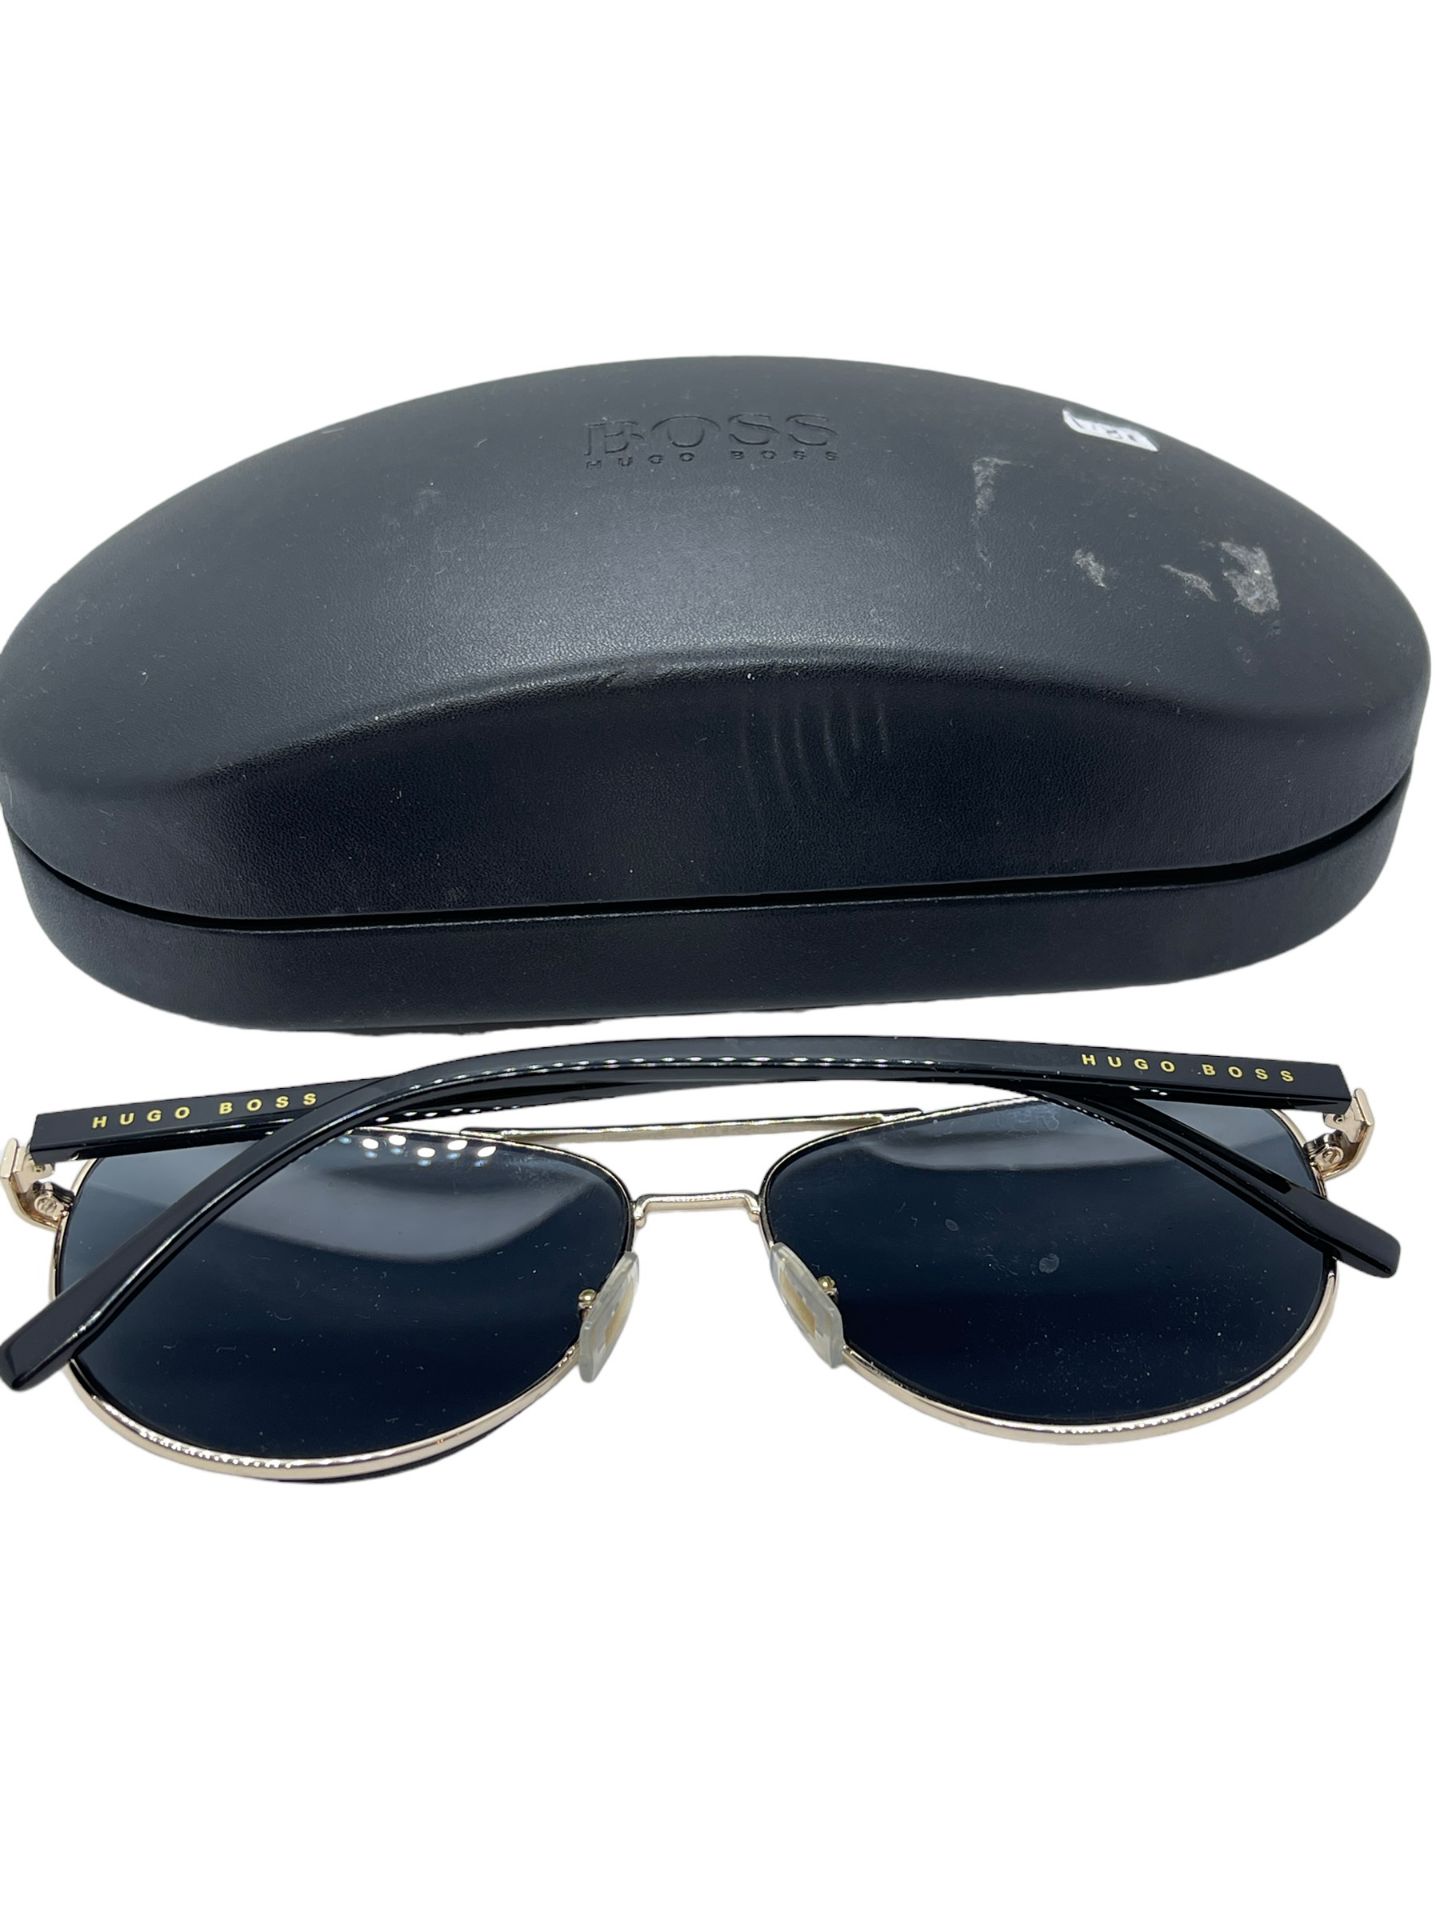 Hugo Boss Sunglasses gold plated aviators with case surplus stock xdemo - Bild 3 aus 6